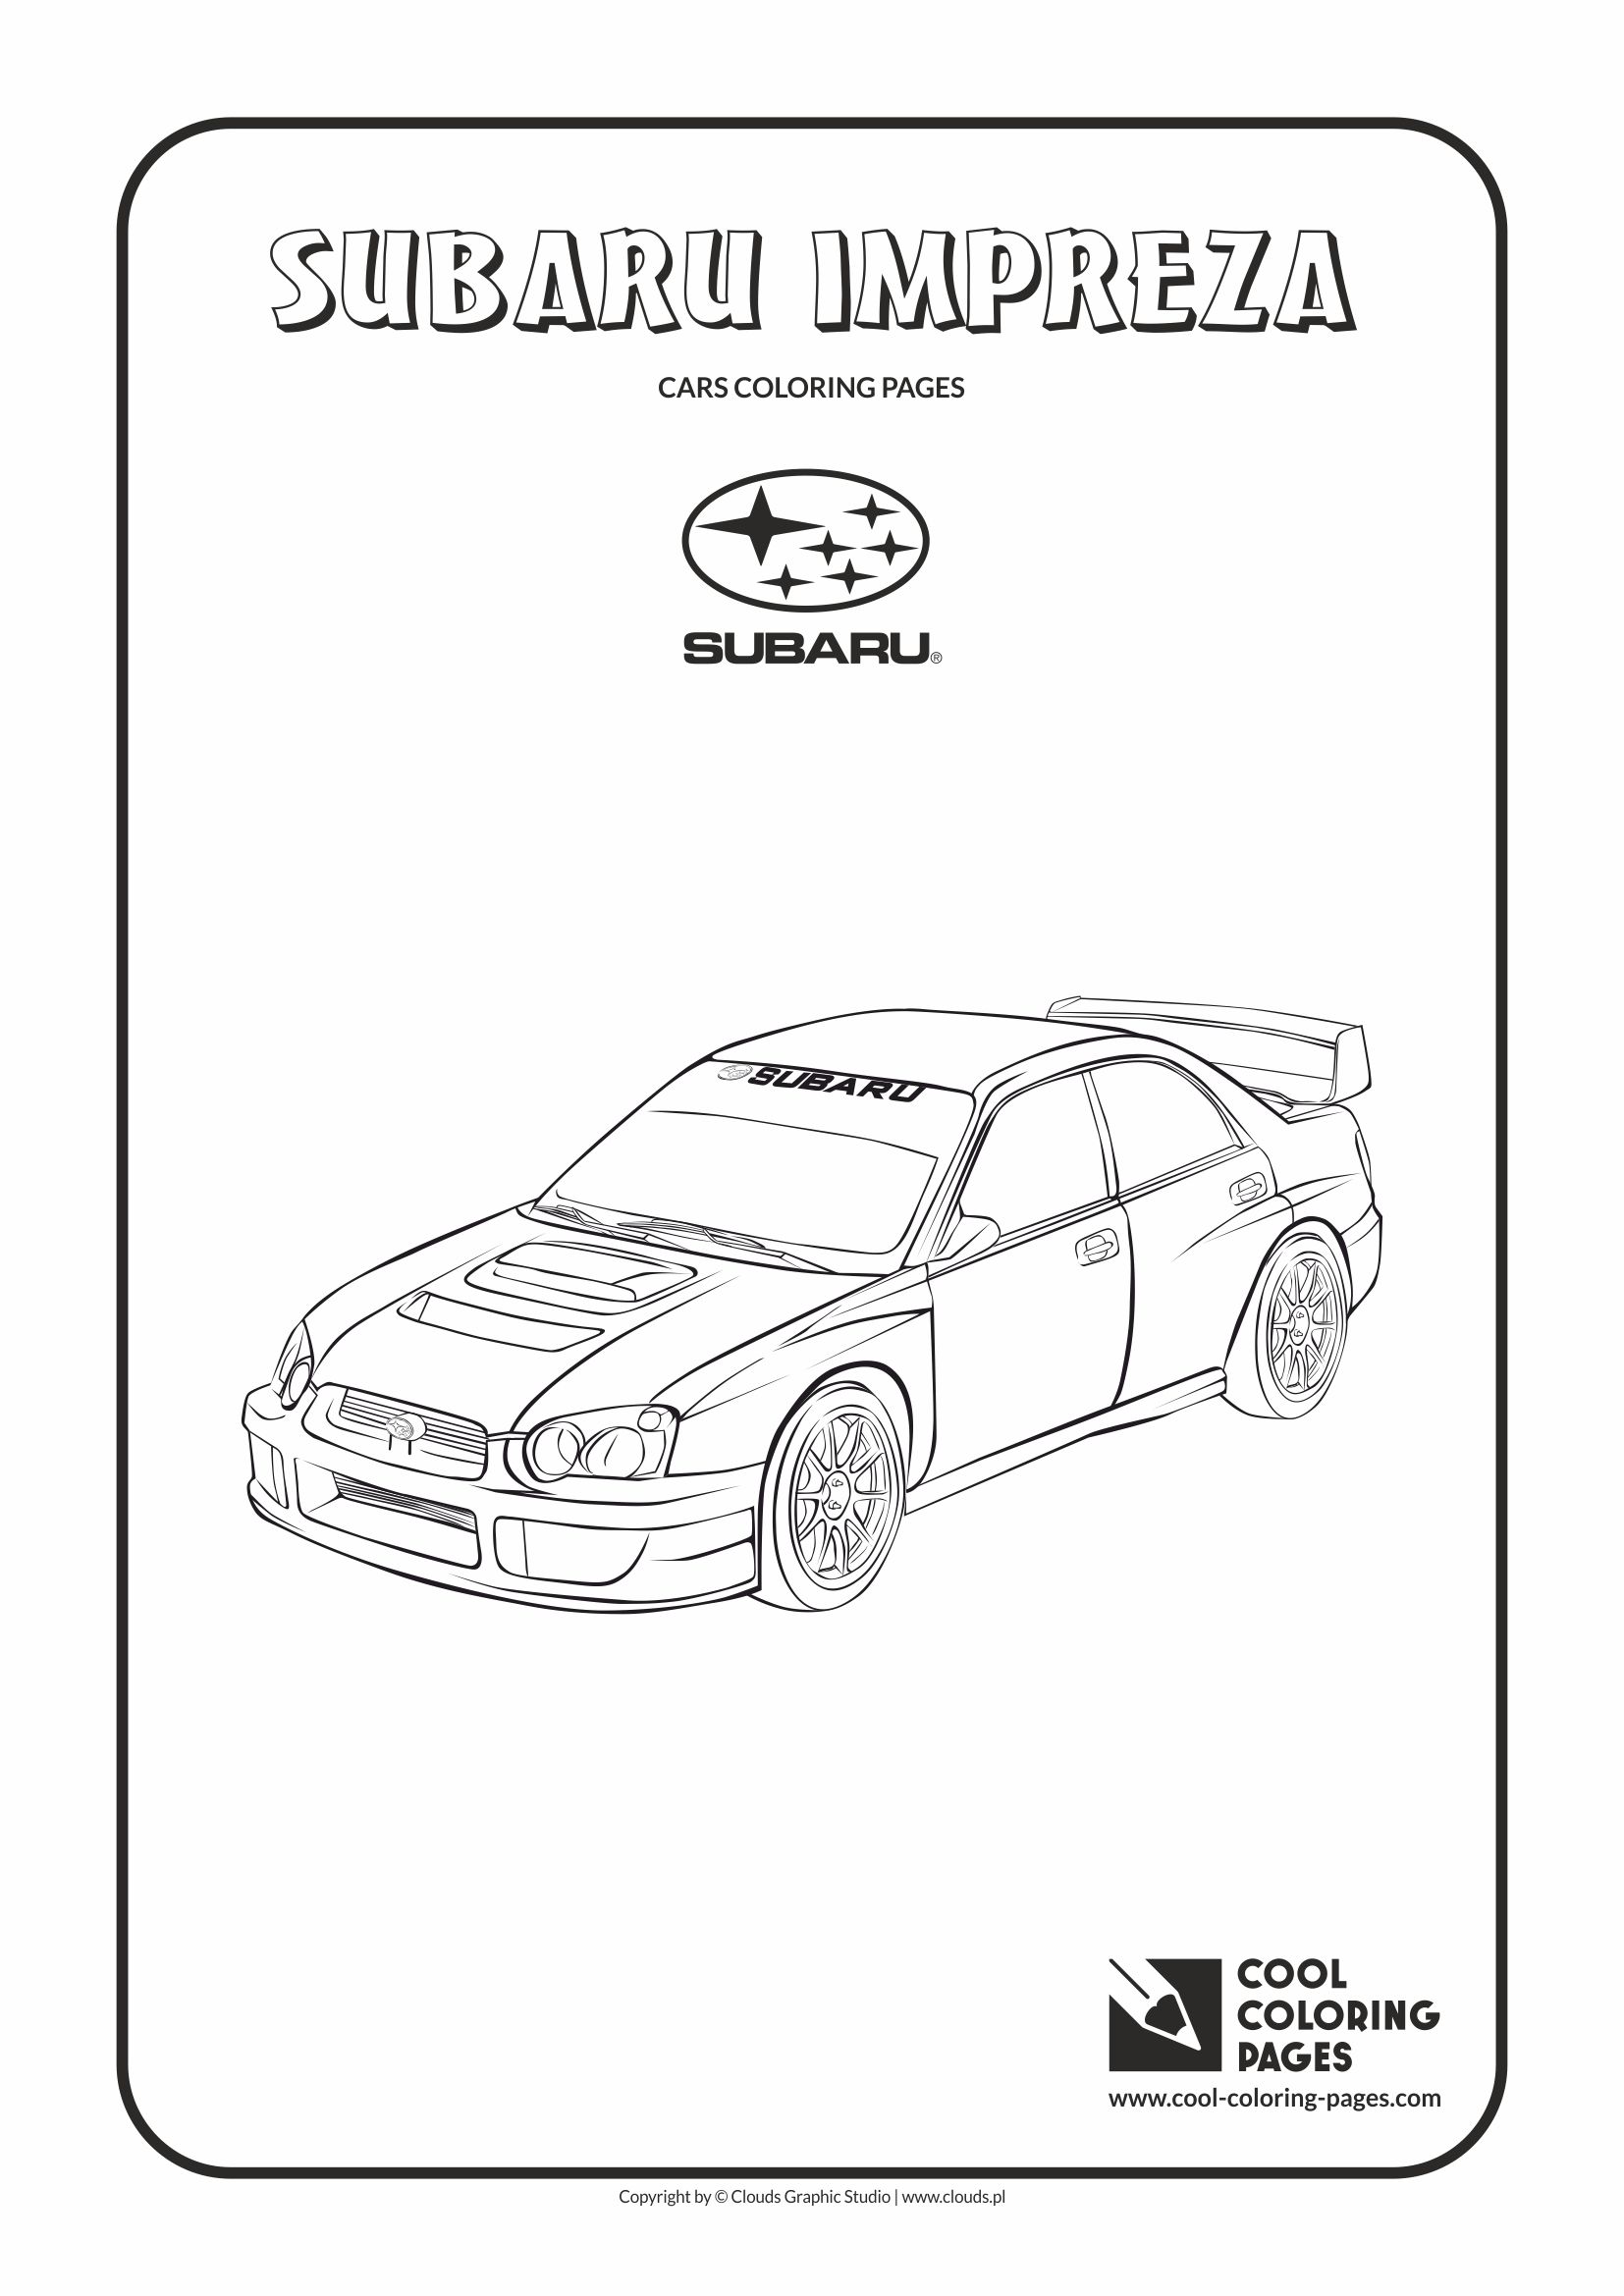 Cool Coloring Pages - Vehicles / Subaru Impreza / Coloring page with Subaru Impreza